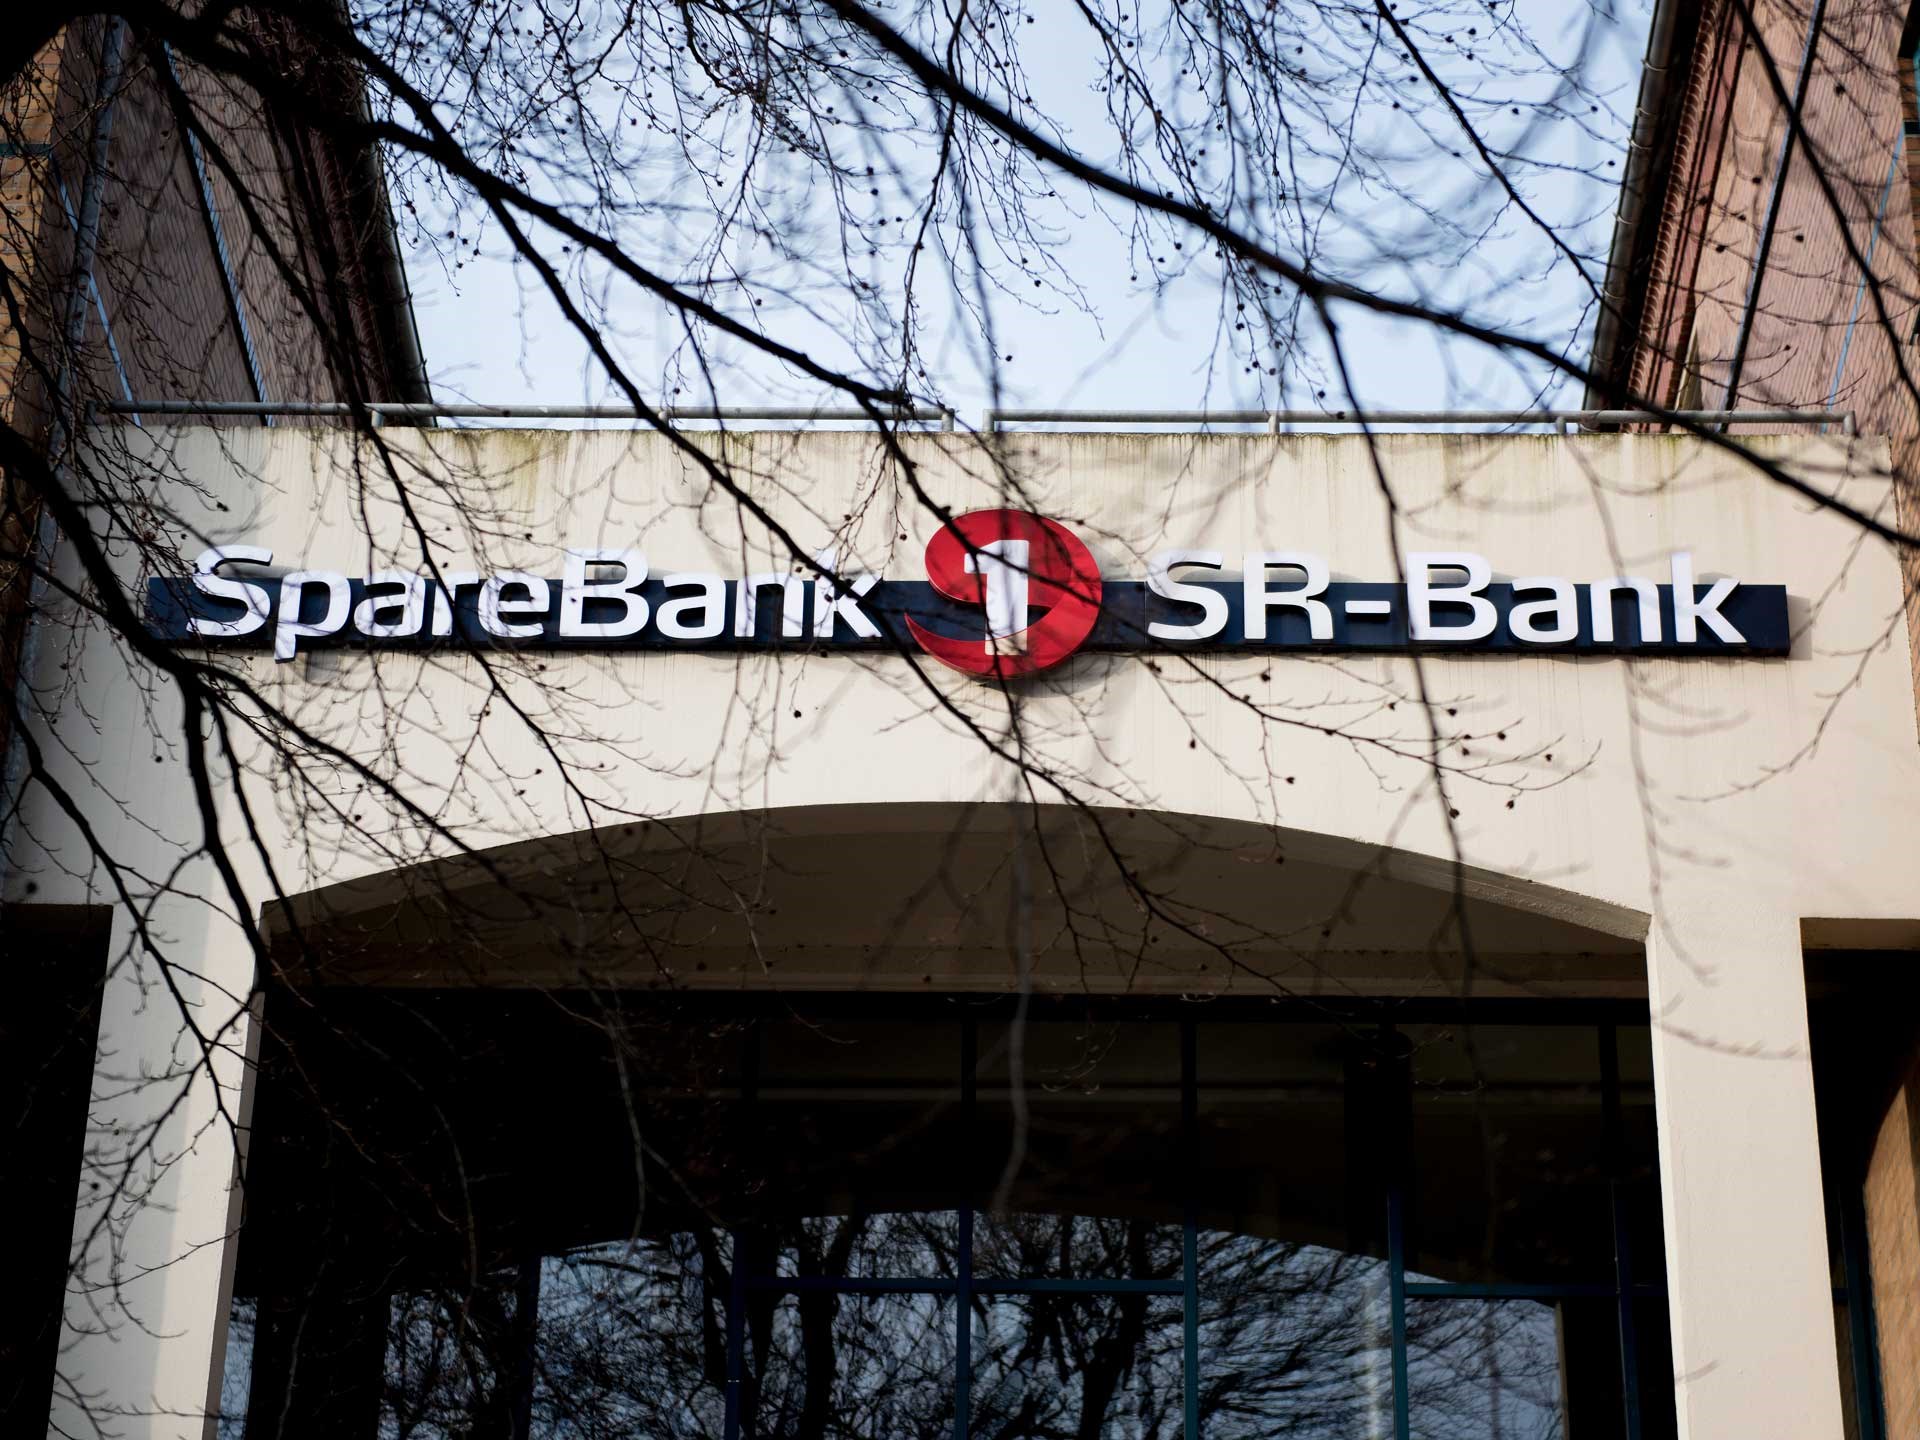 Kontor SR-Bank. Foto: SpareBank 1 SR-Bank